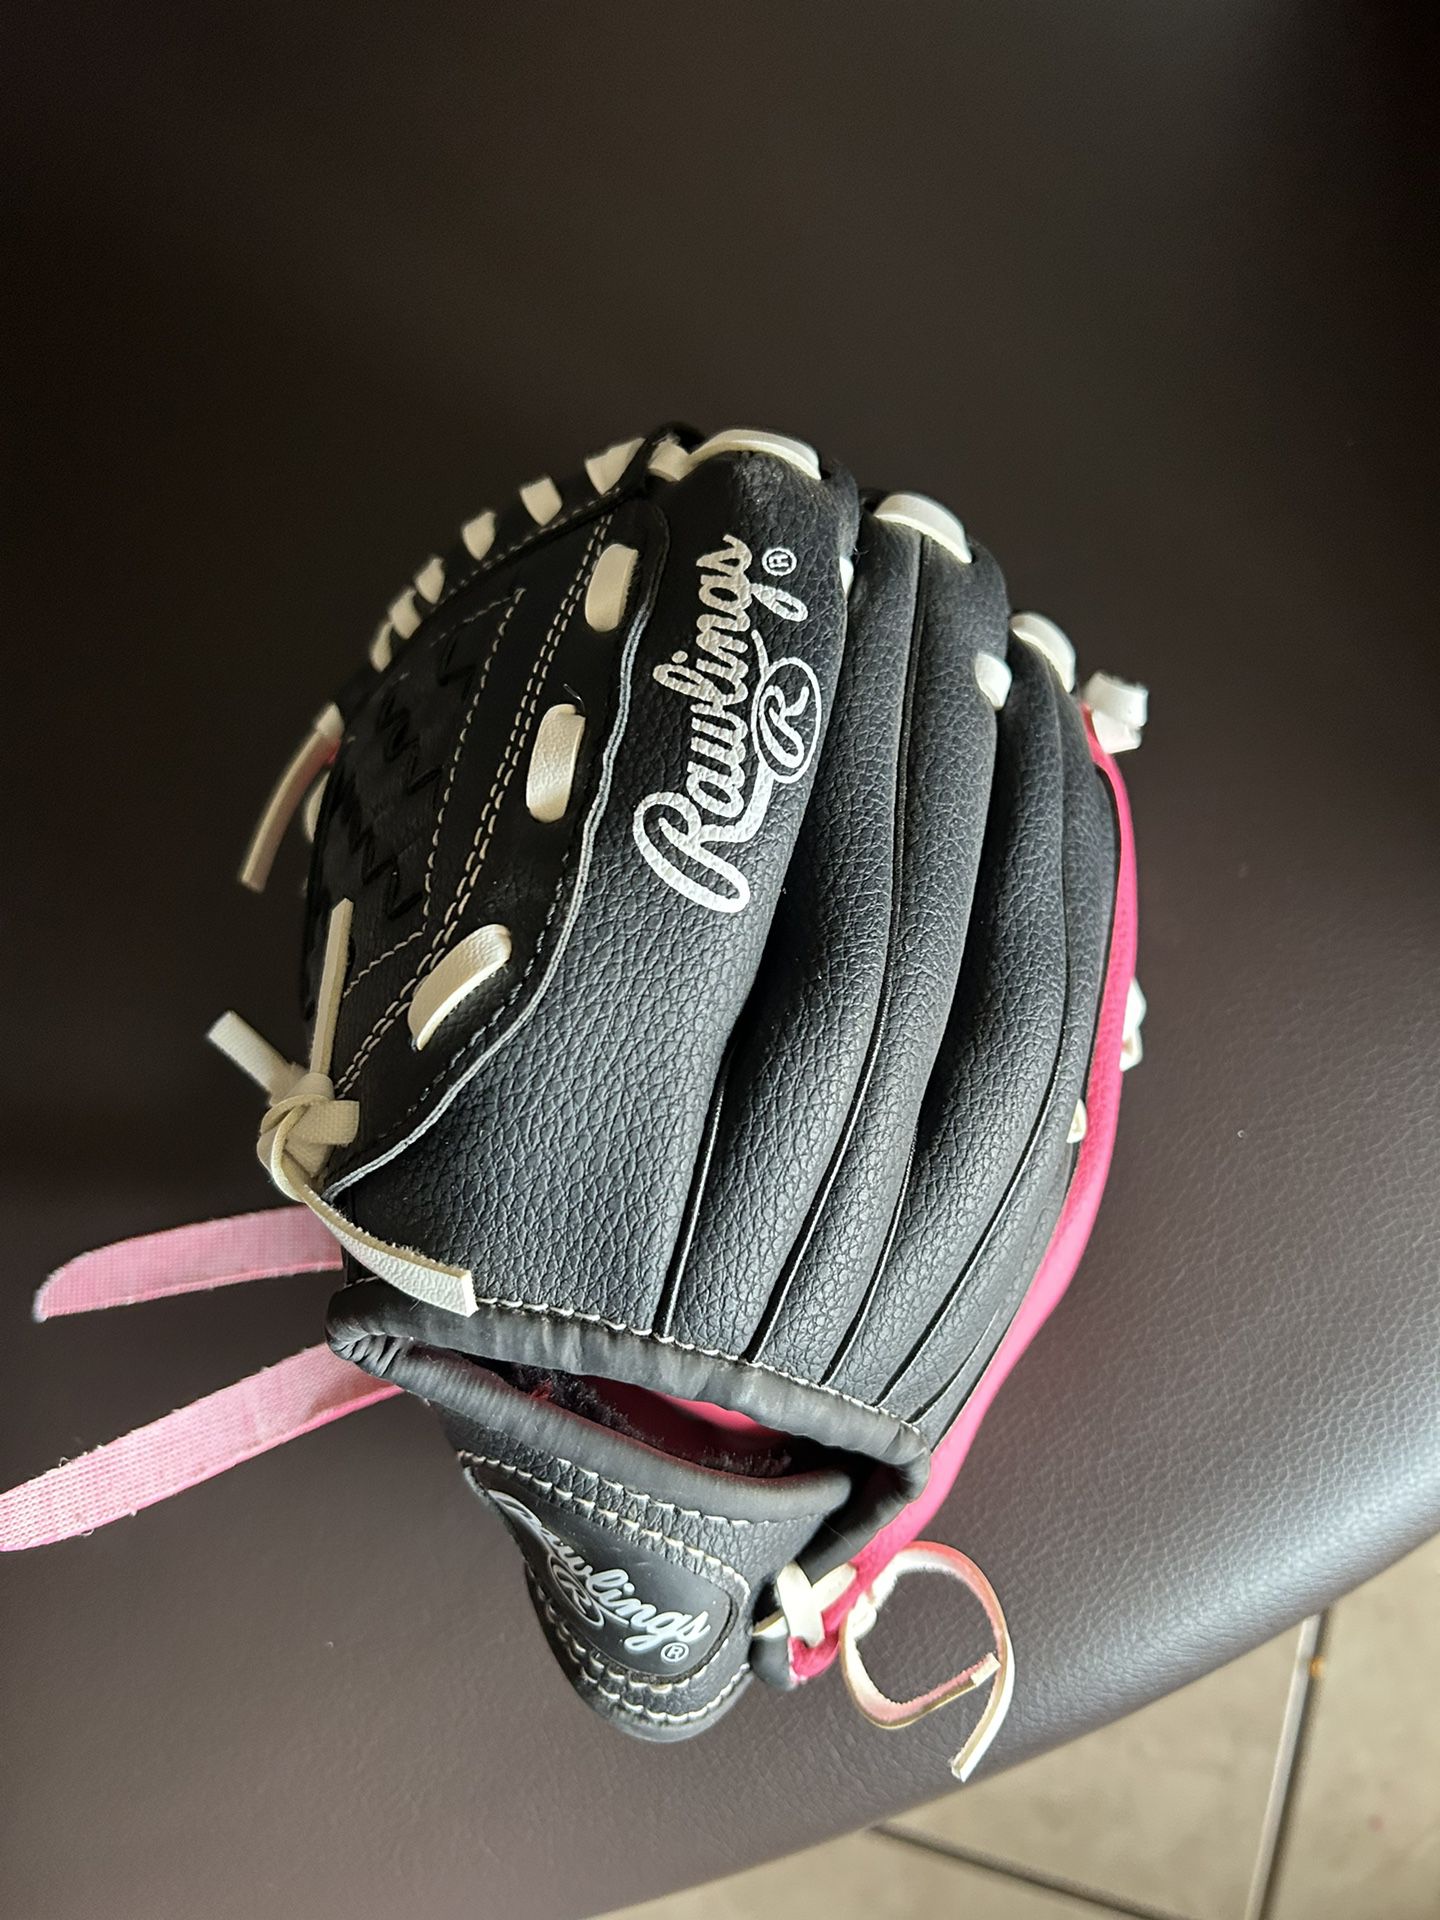 Youth Baseball / Softball Glove